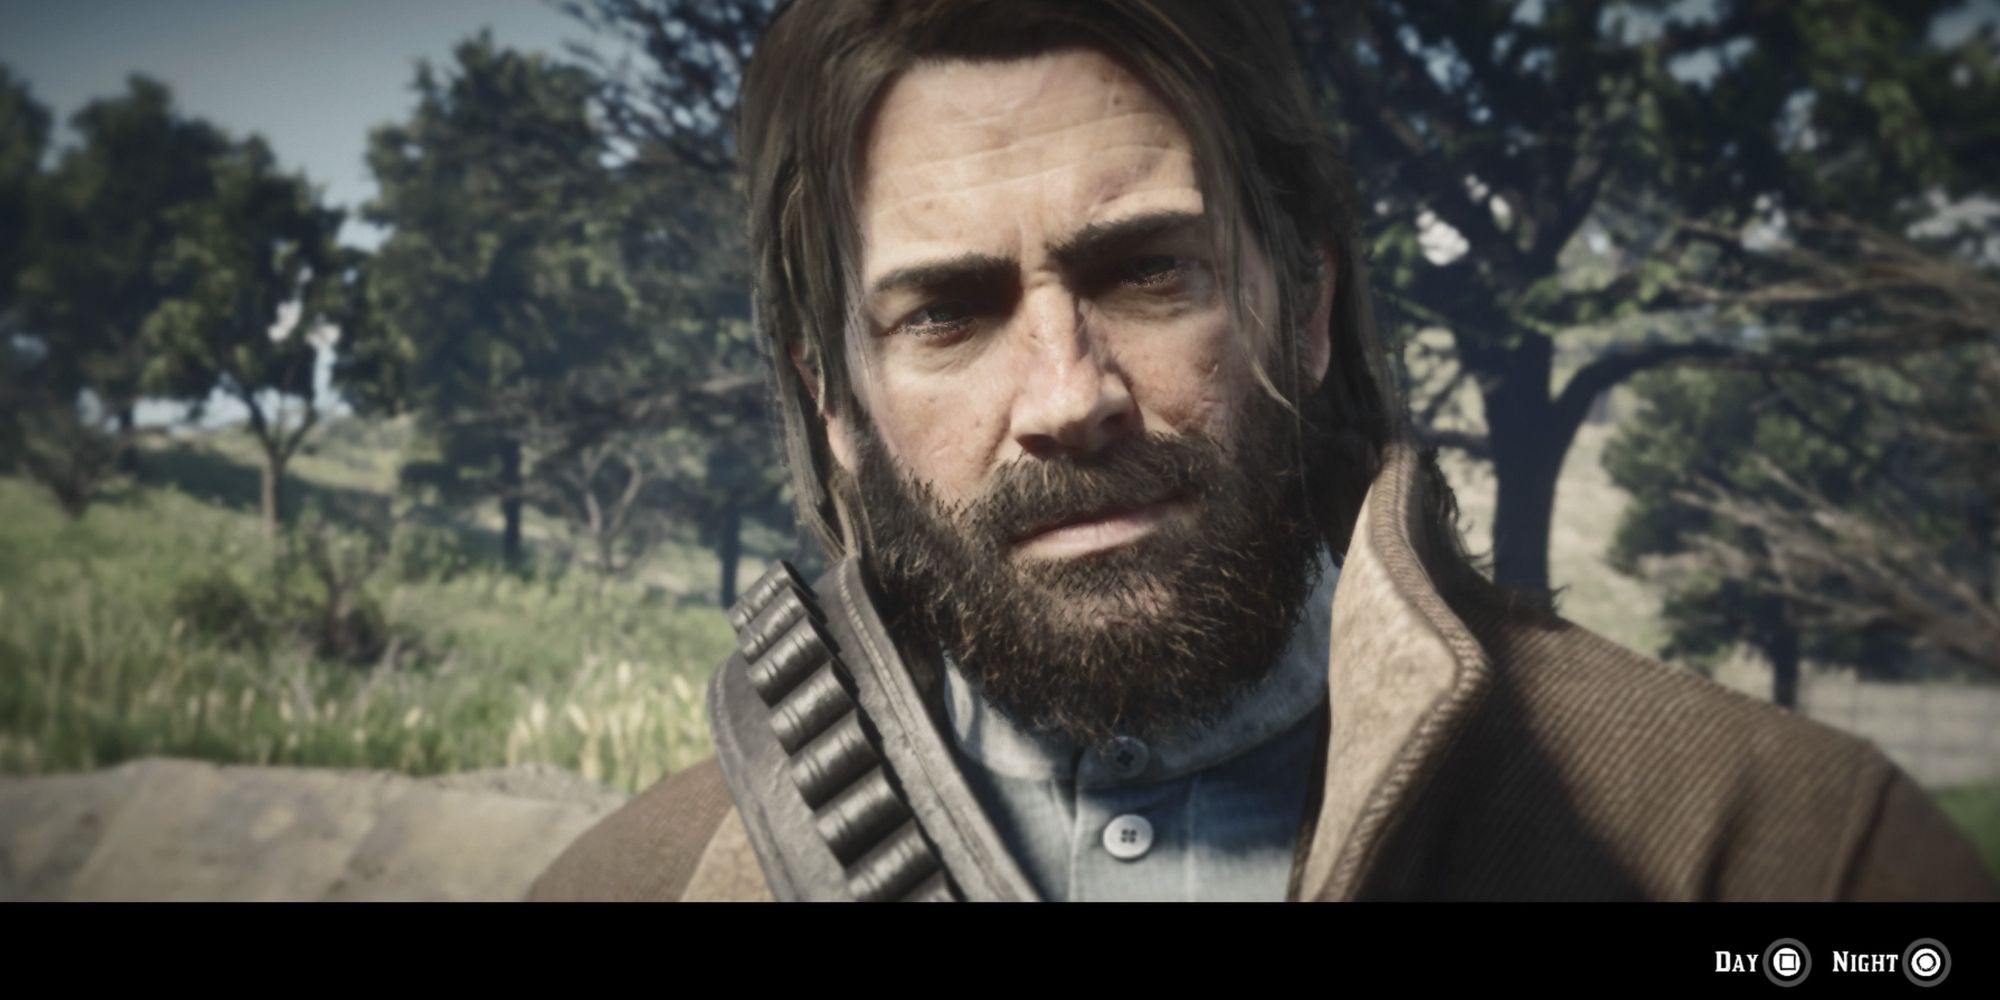 Red Dead Redemption 2 Screenshot Of Arthur Choosing Between Day Or Night